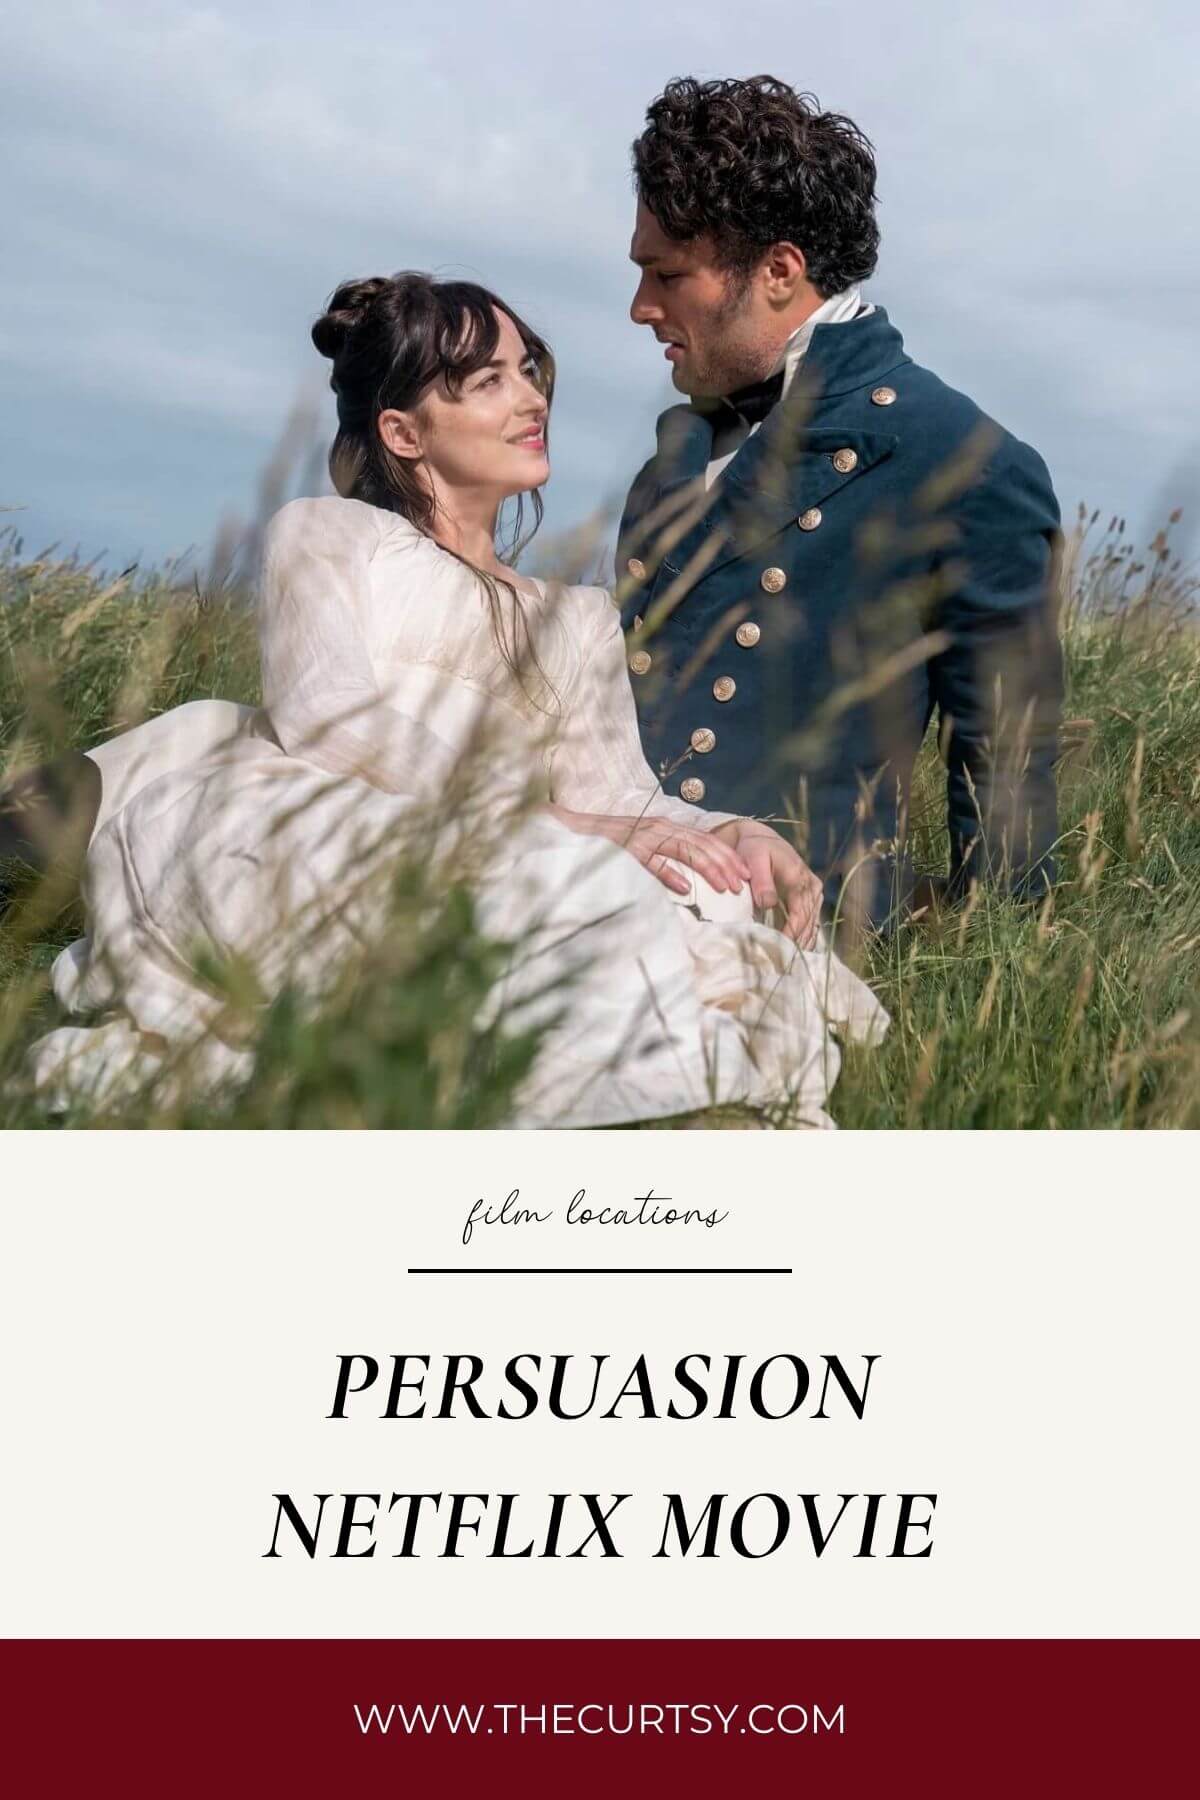 persuasion-netflix-film-locations-the-curtsy